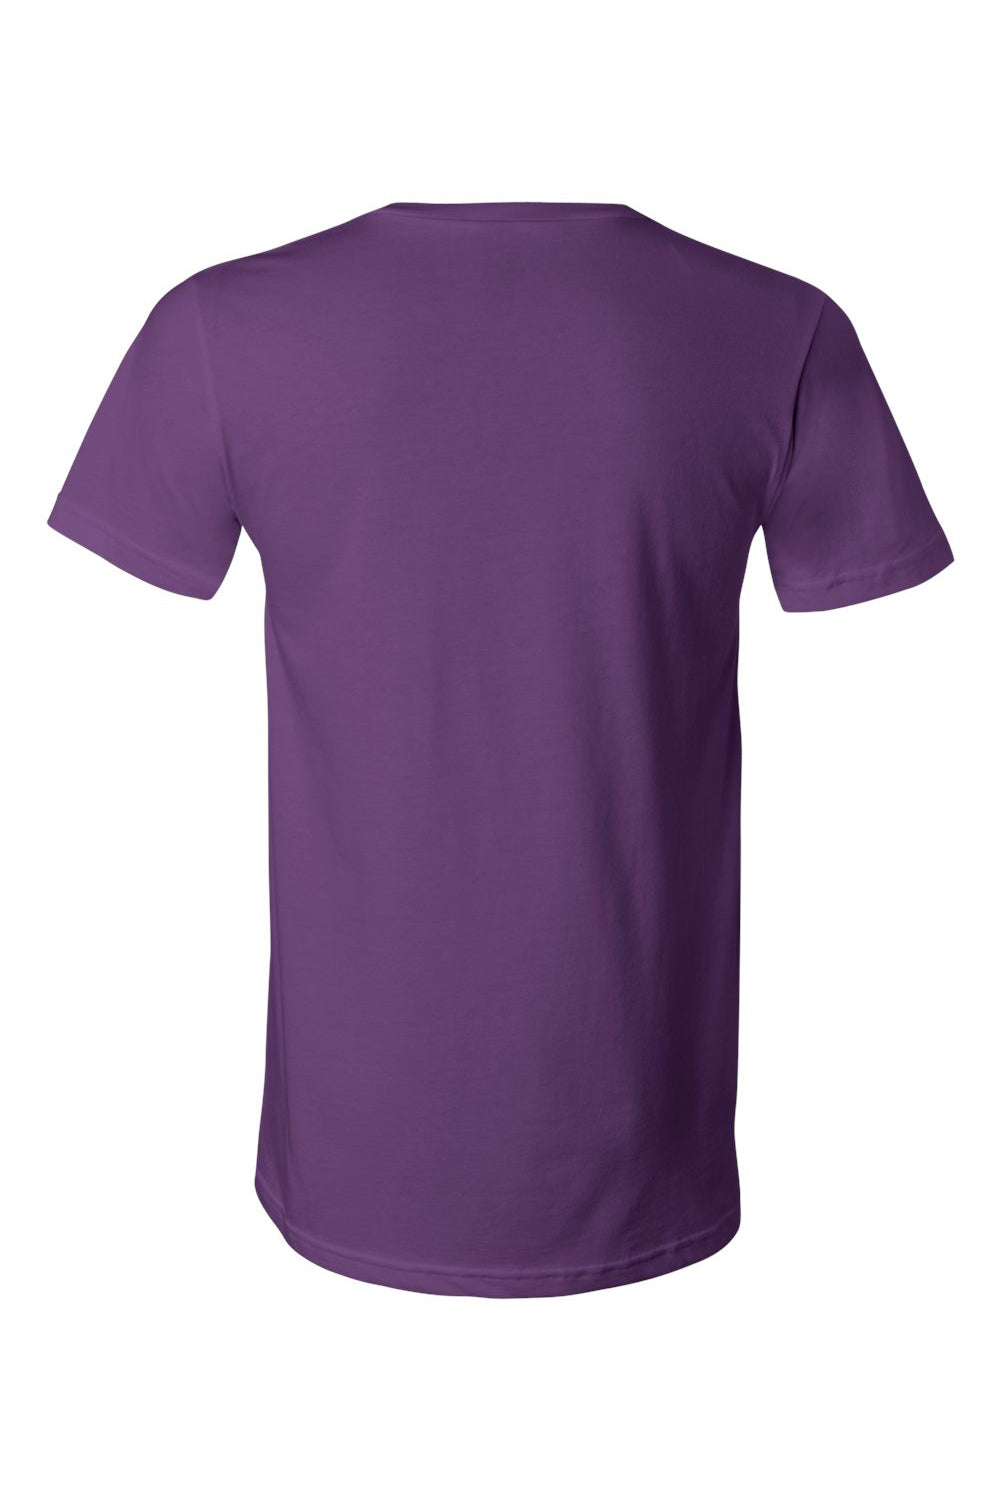 Bella + Canvas BC3005/3005/3655C Mens Jersey Short Sleeve V-Neck T-Shirt Team Purple Flat Back